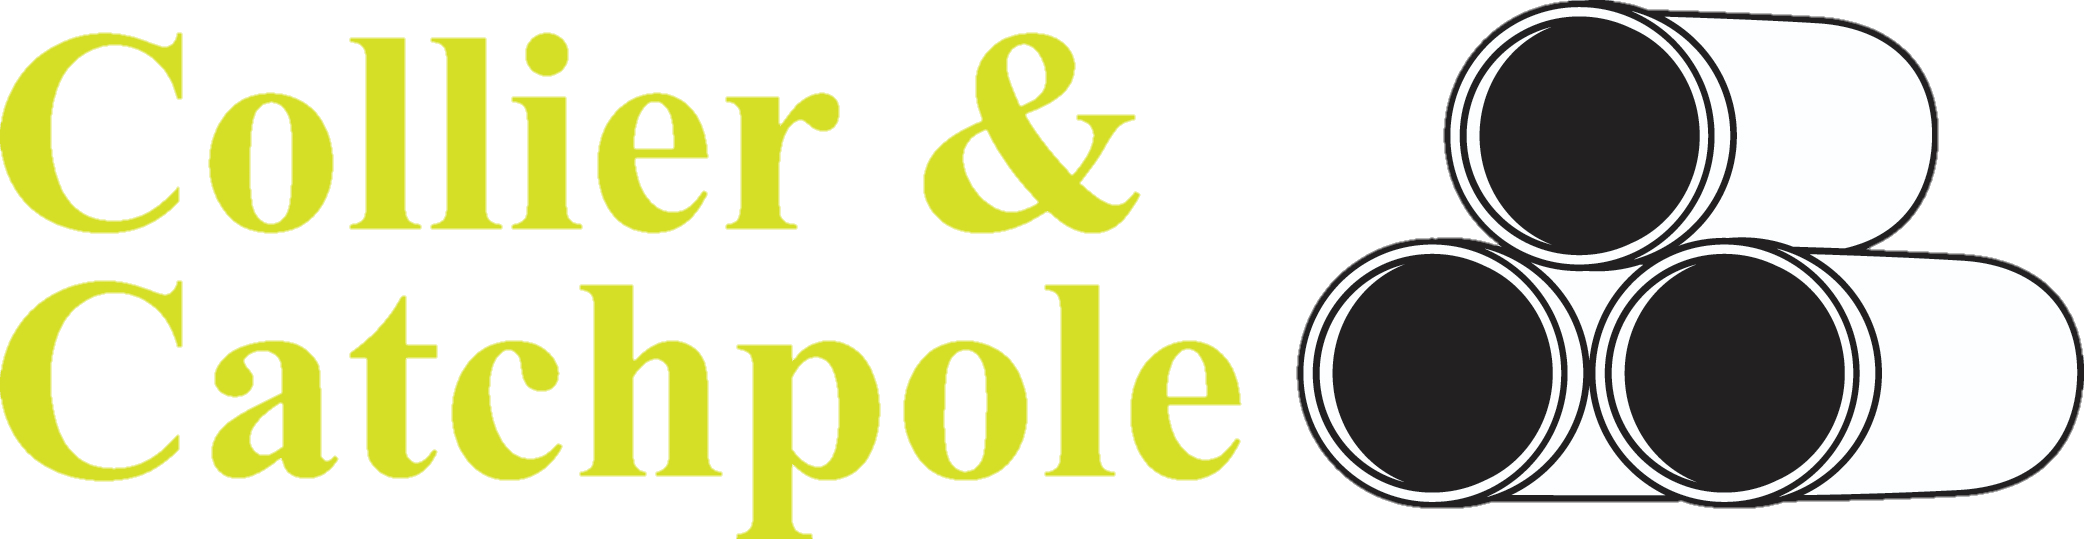 Collier & Catchpole – Colchester Logo